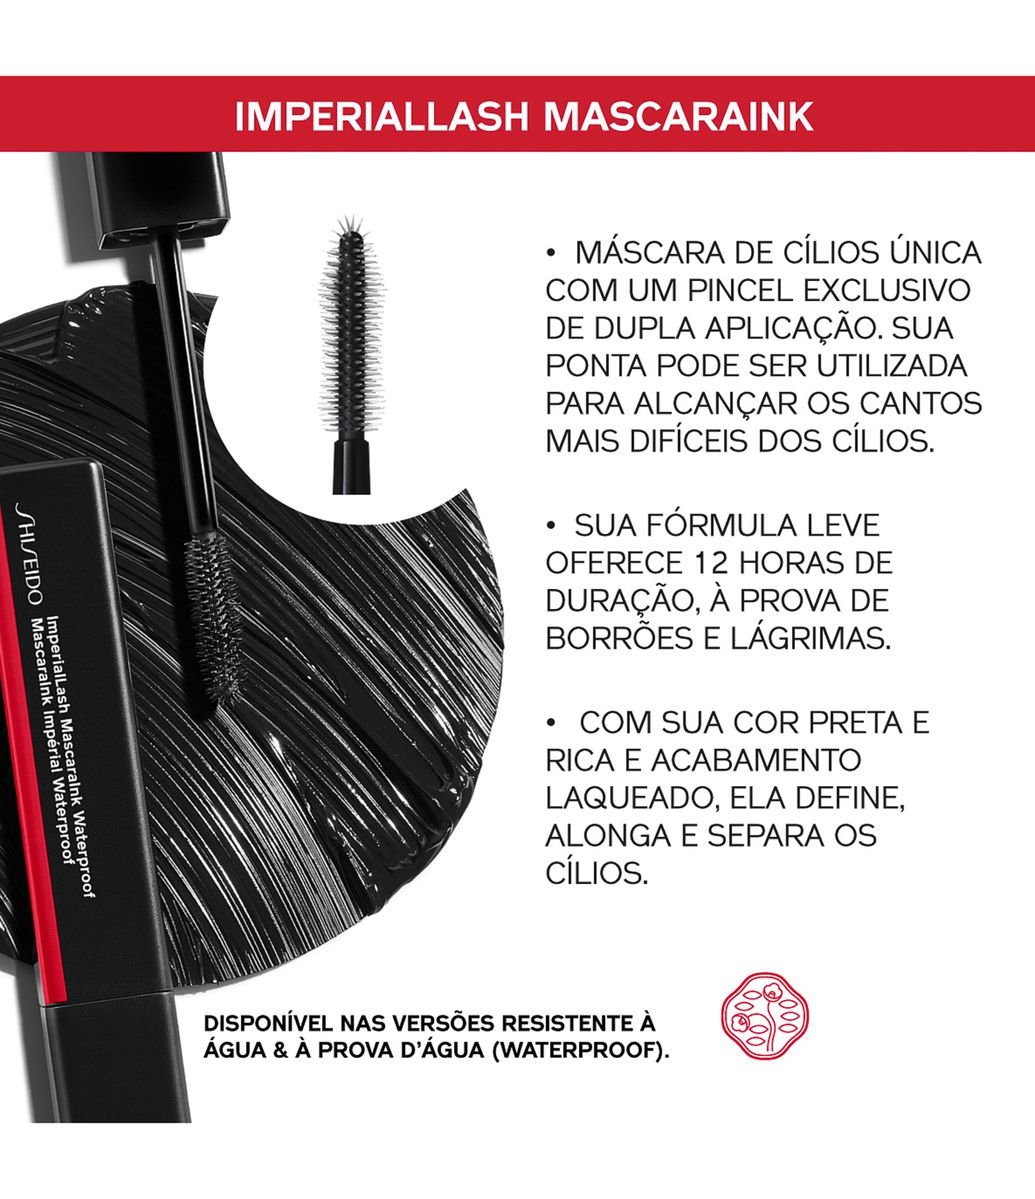 Máscara De Cílios Imperiallash Mascaraink A Prova D'água Shiseido 01 Black